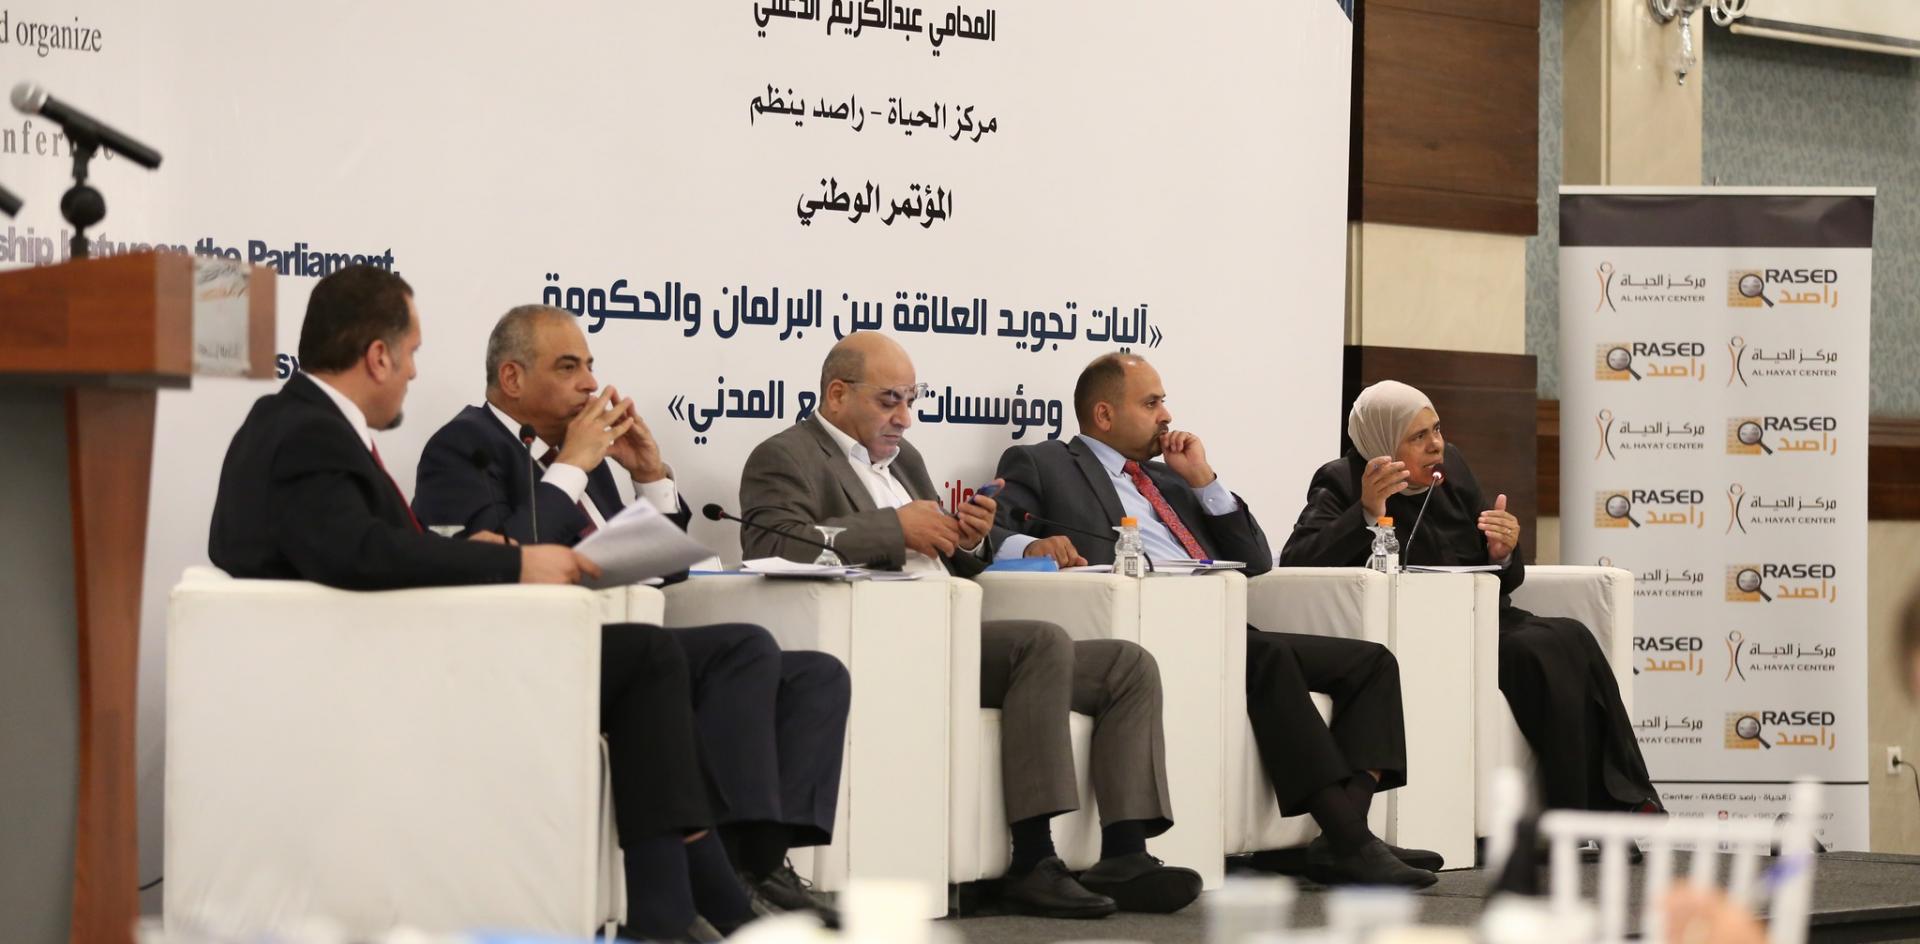 Abdel kareem Al Doghmi Conference